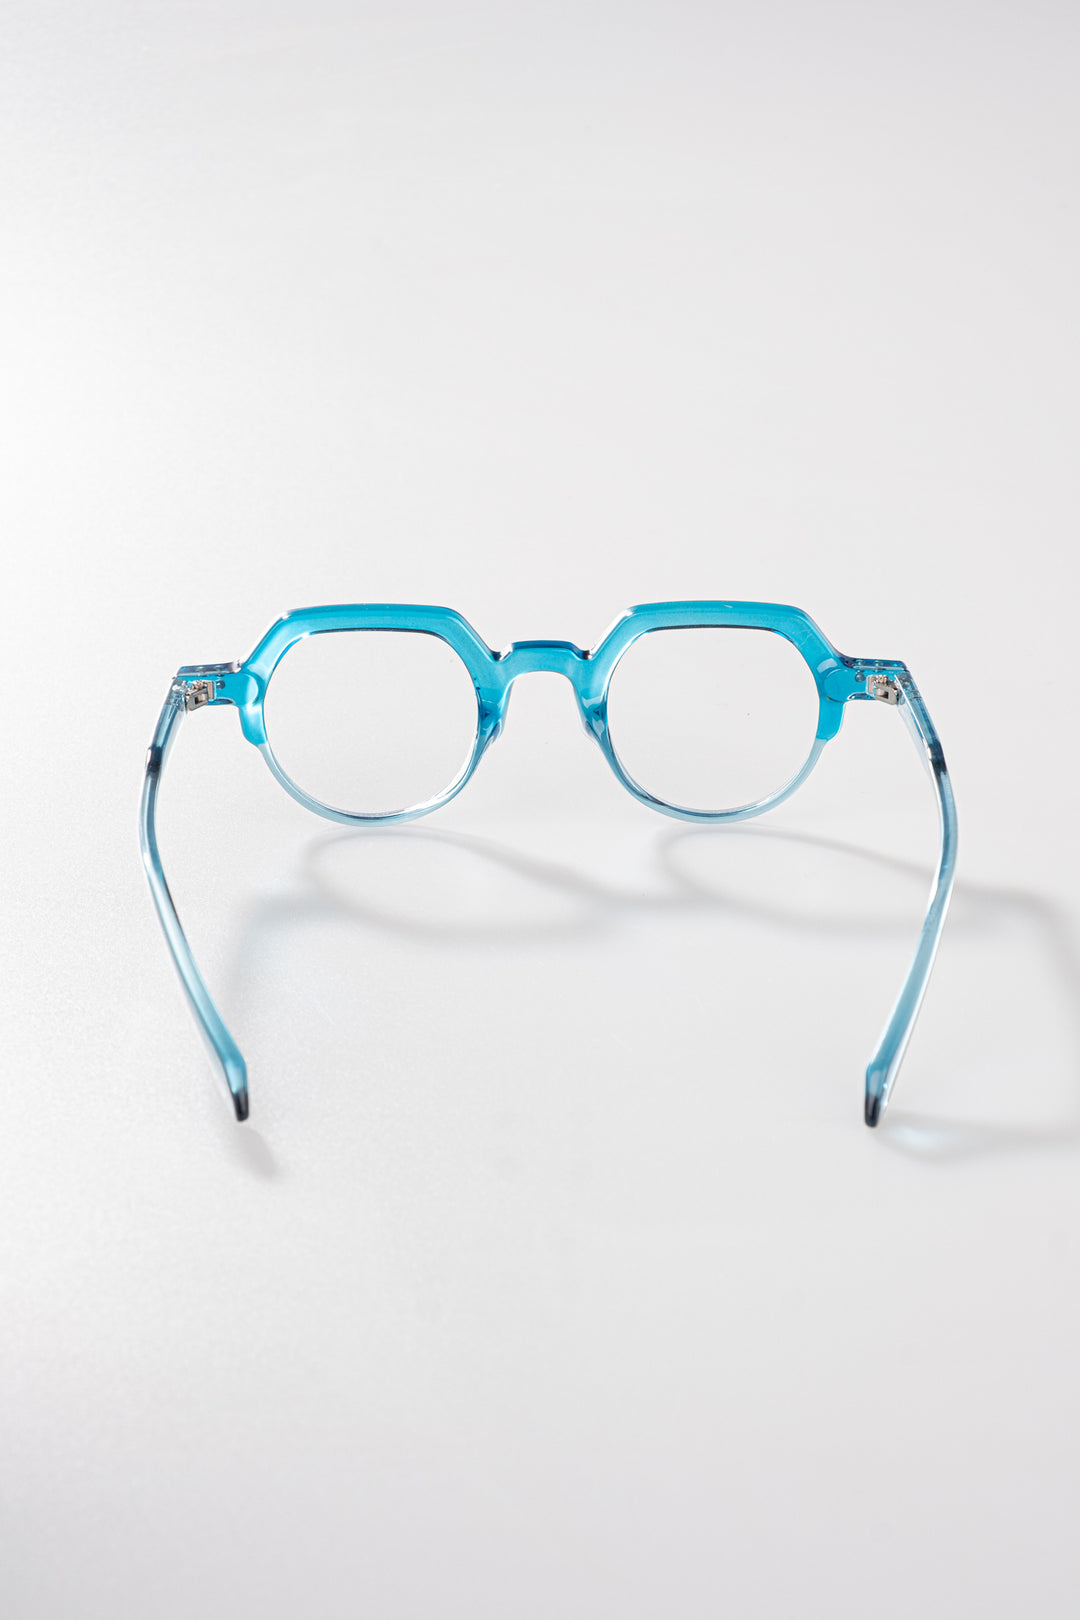 Rio Blue Light Protection Glasses